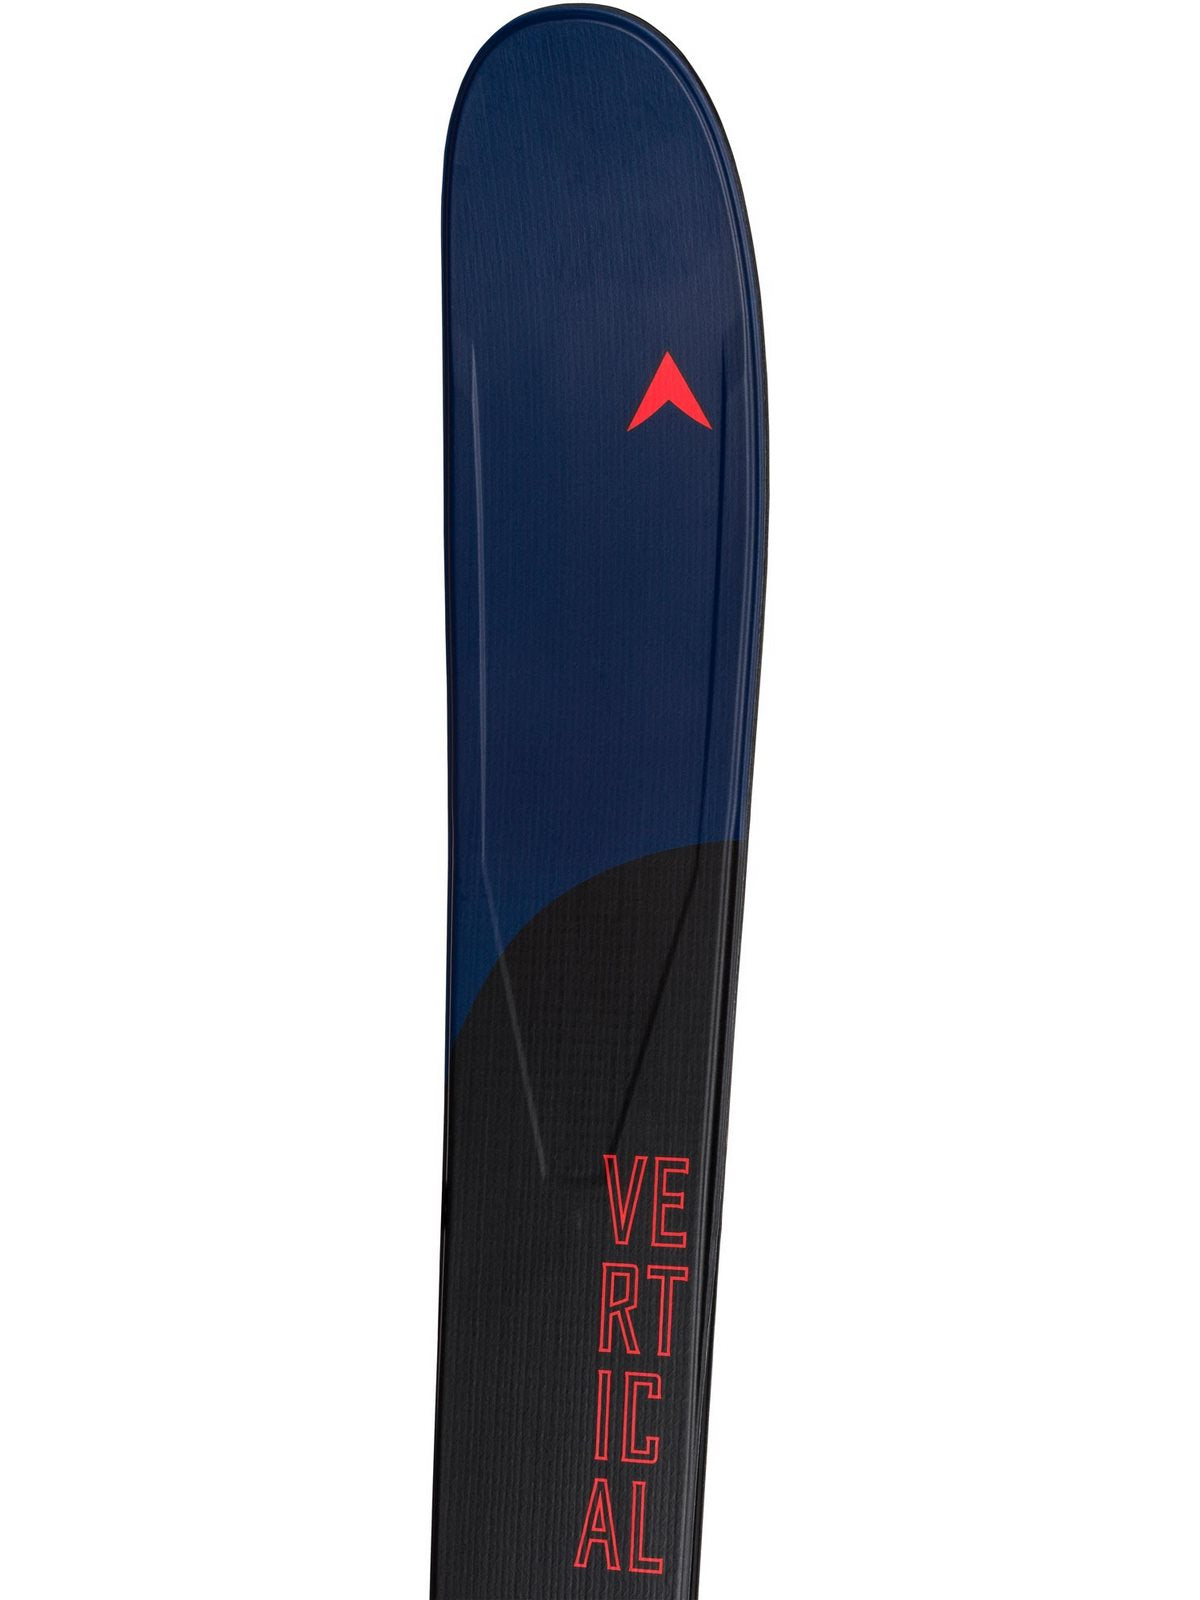 Narty skitourowe DYNASTAR VERTICAL PRO + wiązania LOOK ST 10 BK WHT